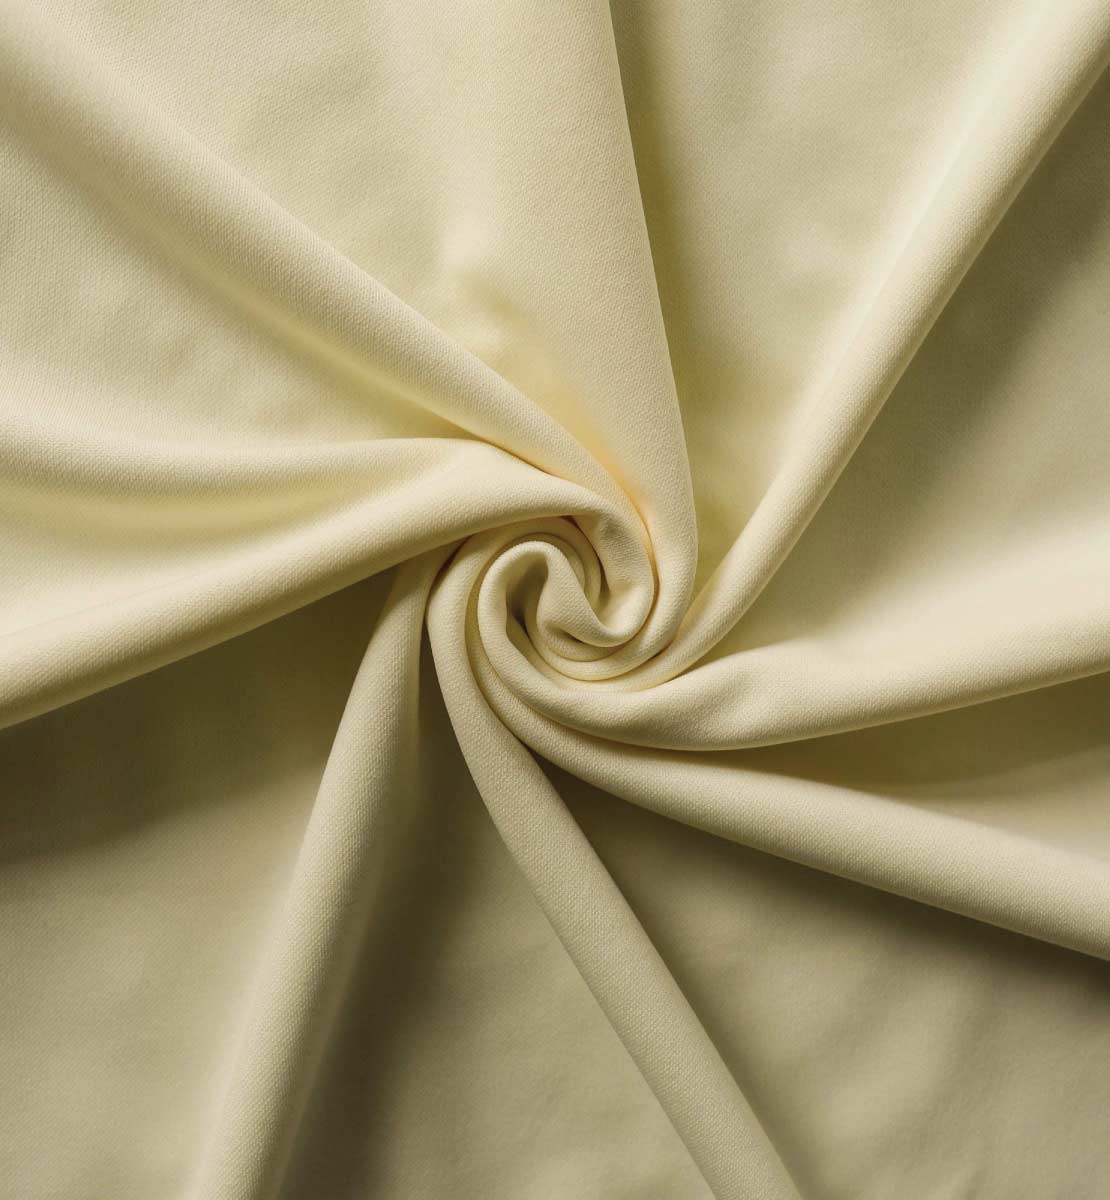 Wholesale Spandex Fabric White 75 yard roll